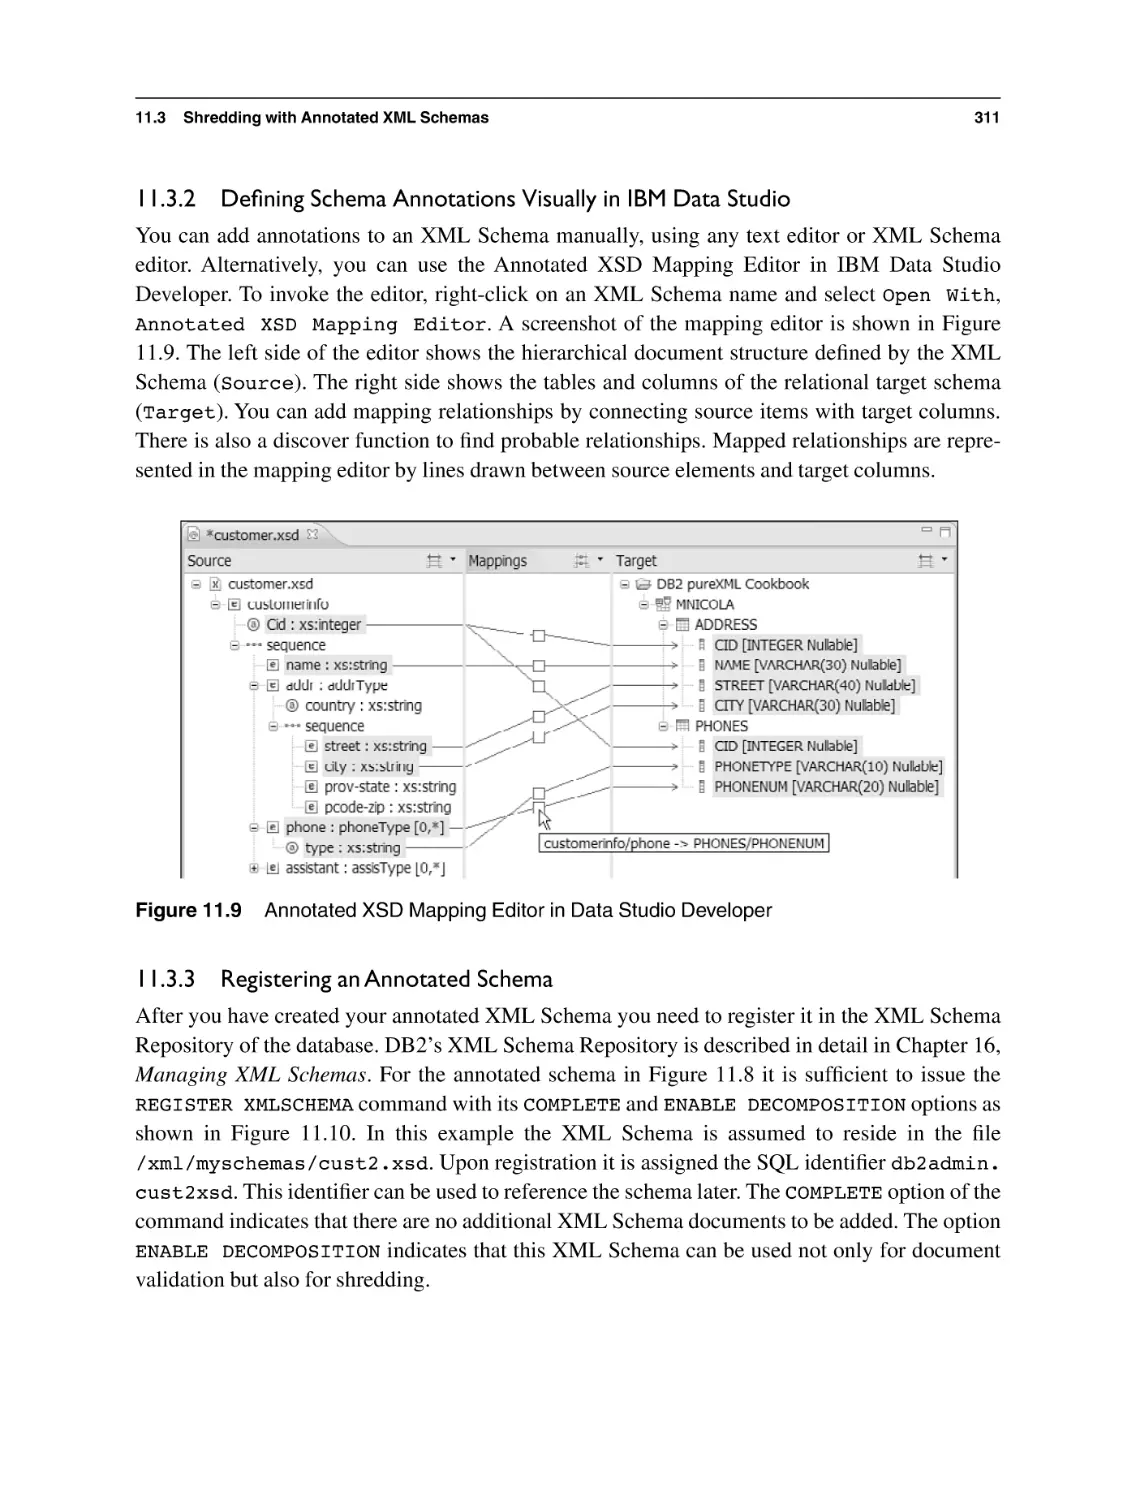 11.3.2 Defining Schema Annotations Visually in IBM Data Studio
11.3.3 Registering an Annotated Schema